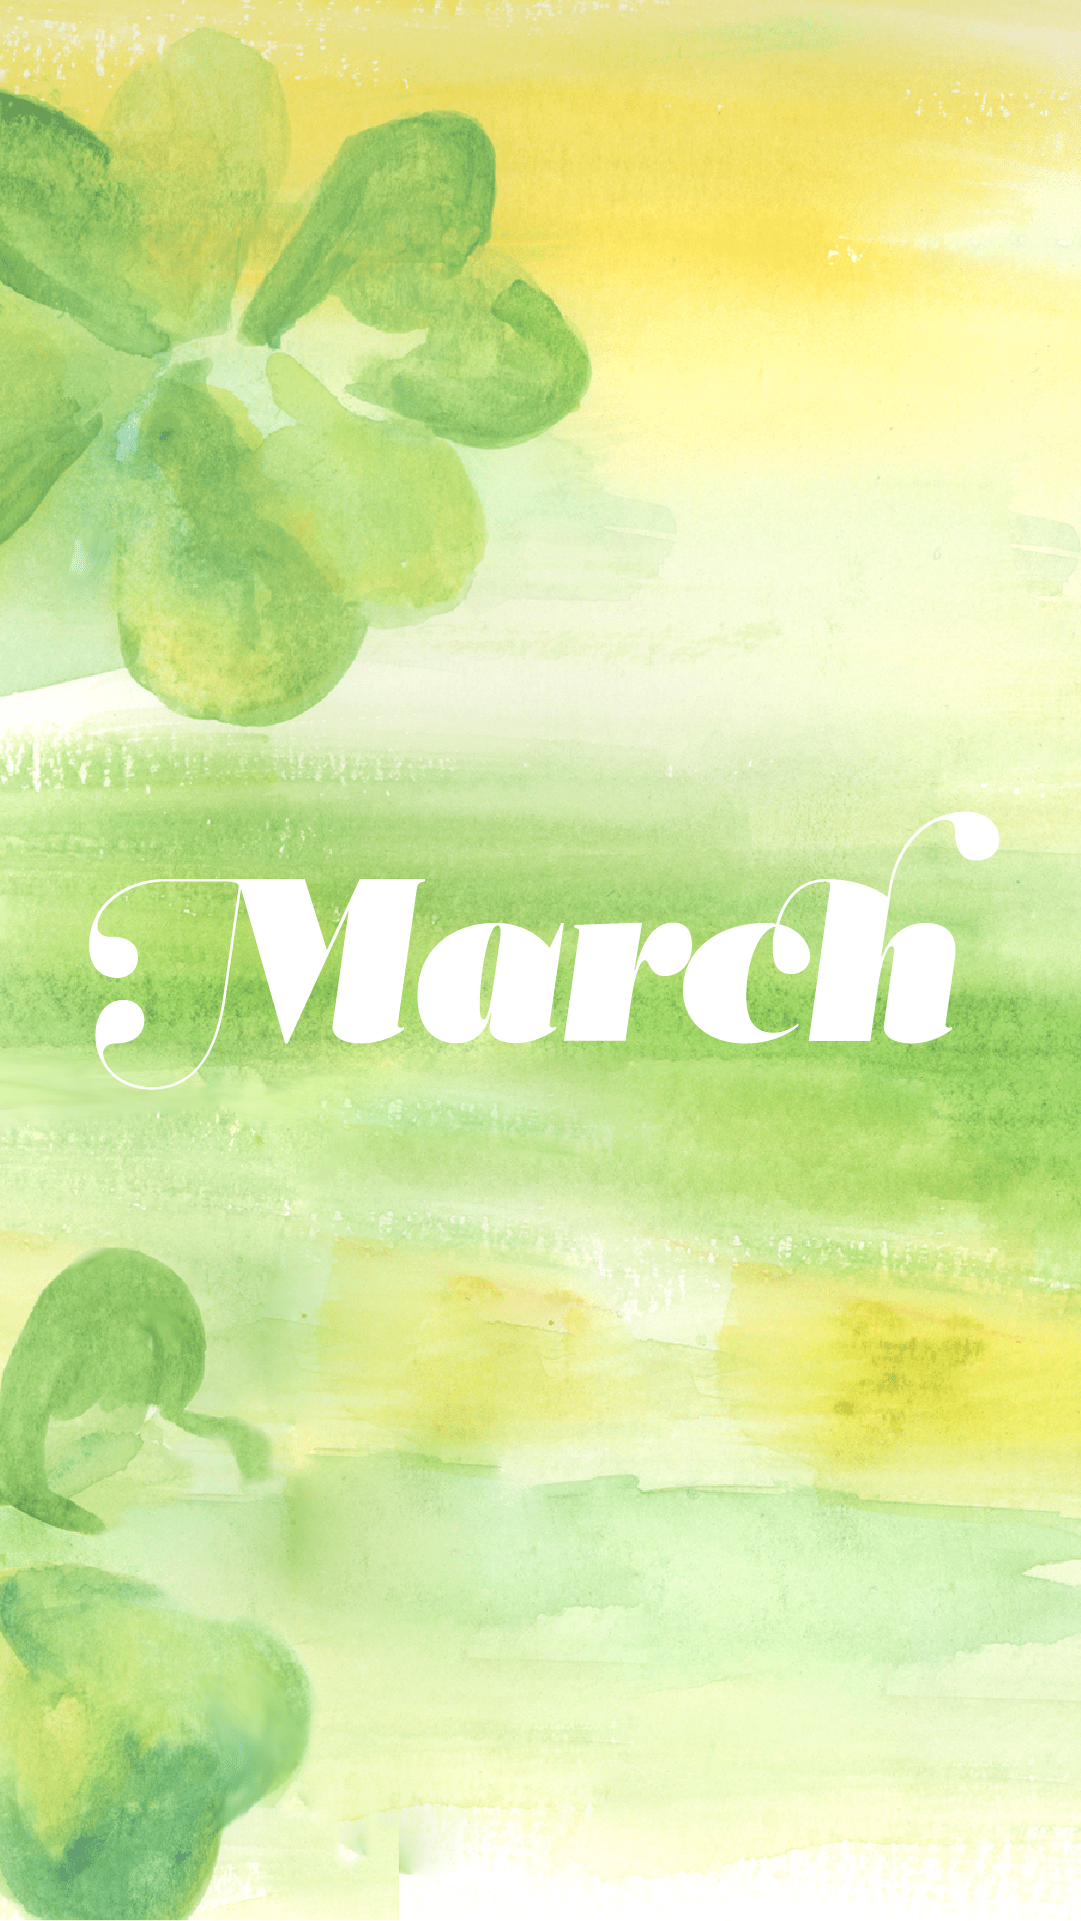 March 2022 Calendar iPhone Wallpapers  PixelsTalkNet